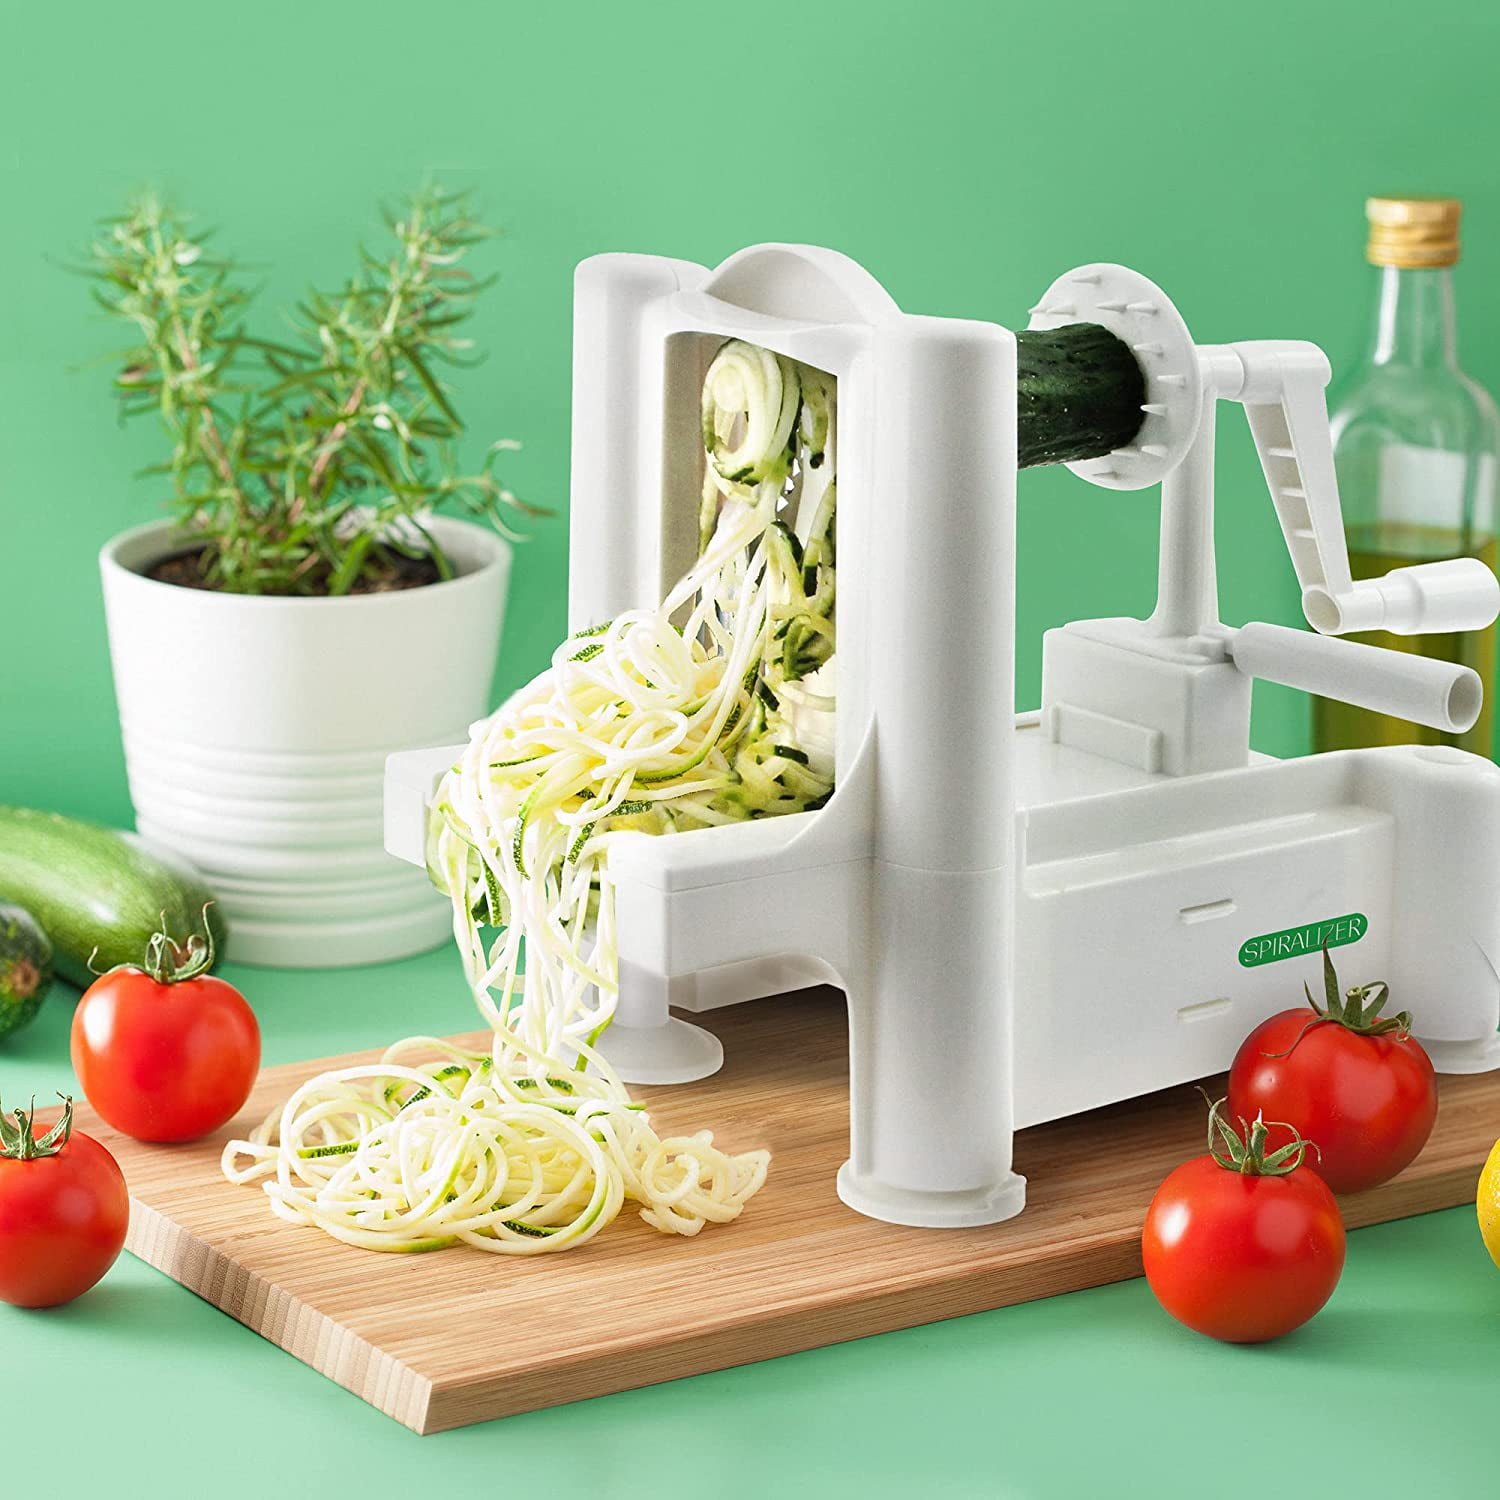 ColorLife Spiralizer 7-Blade Vegetable Slicer, Strongest-And-Heaviest  Spiral Slicer, Best Veggie Pasta Spaghetti Maker For Keto/Paleo/Non-Gluten,  Comes With 4 Recipe Ebooks